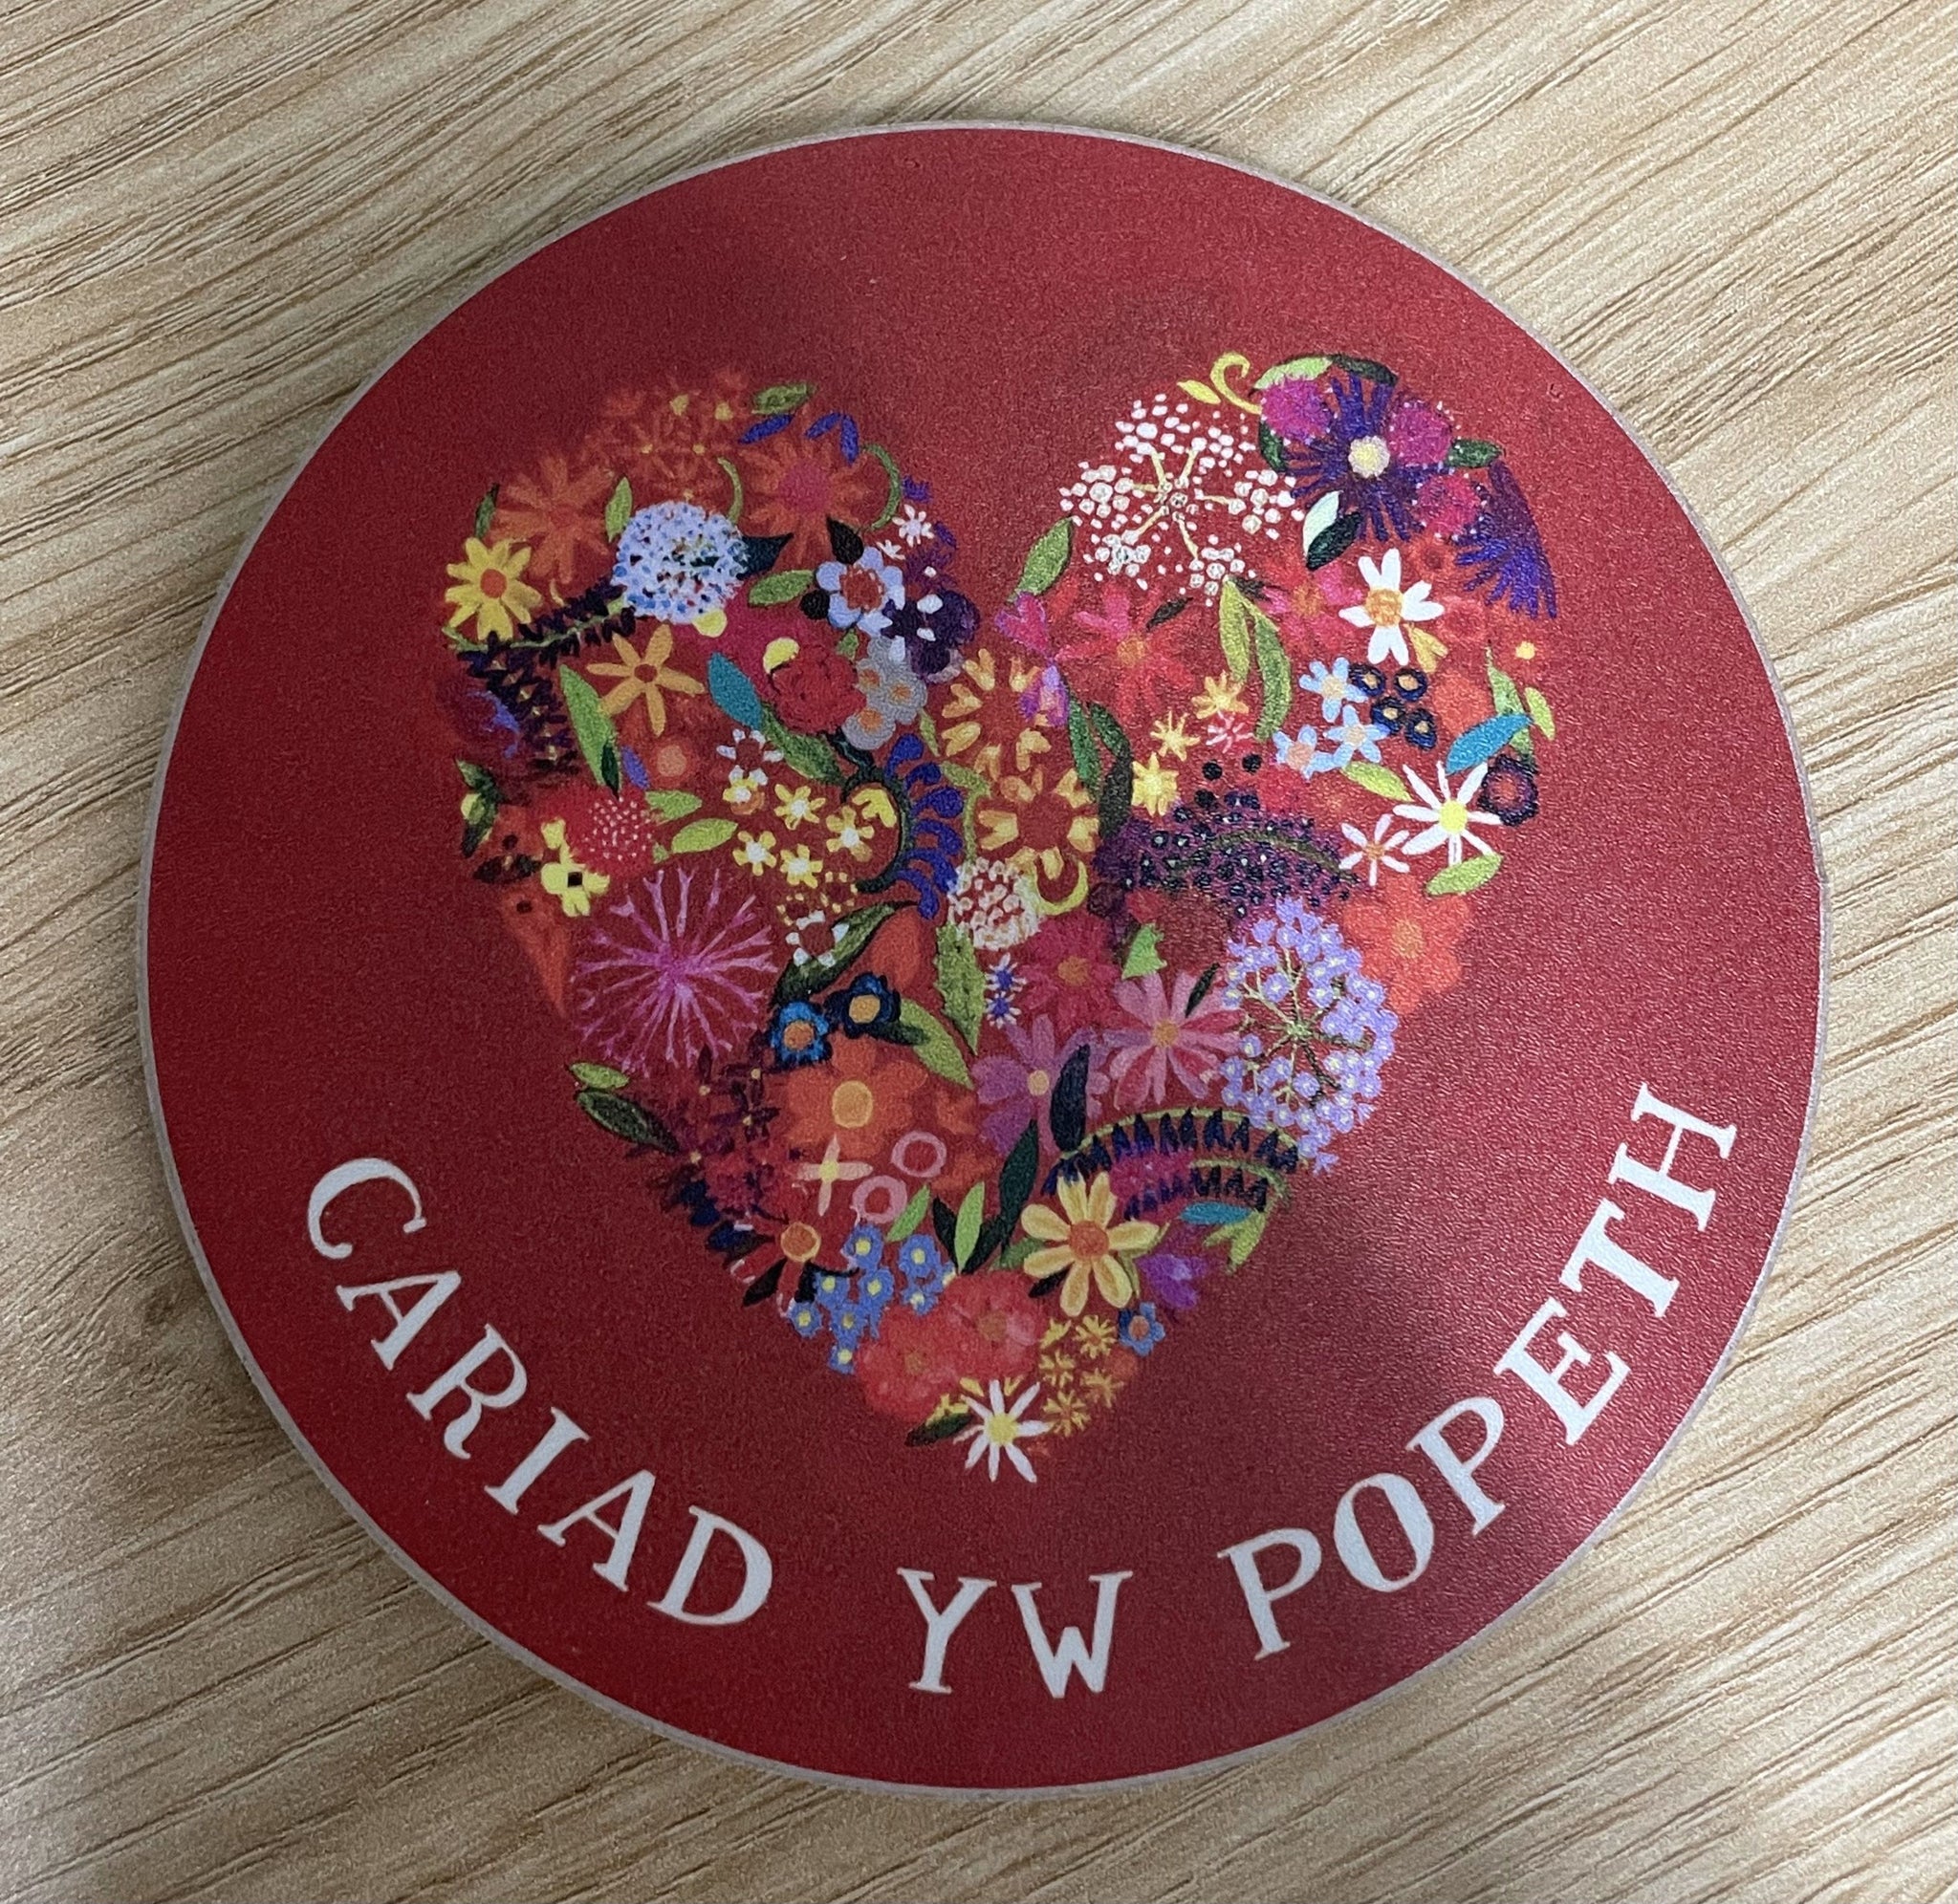 'Cariad yw Popeth' round coaster by Lizzie Spikes